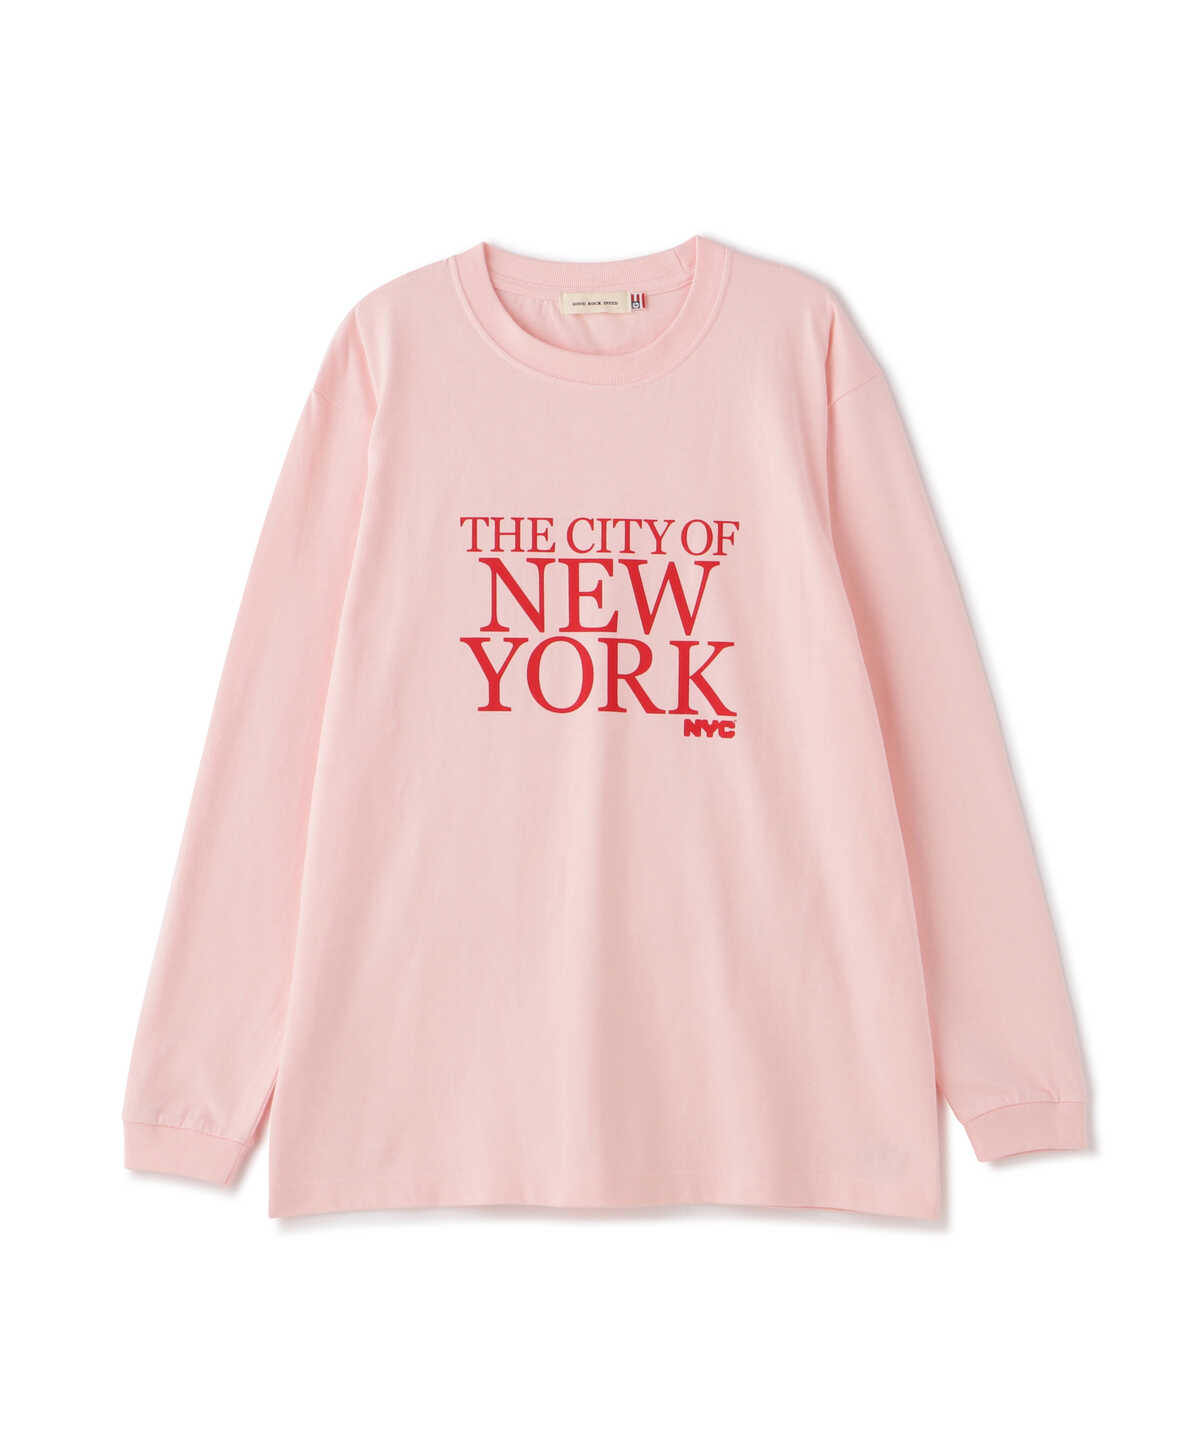 GOOD ROCK SPEED】 NYC ロンTシャツ | N. Natural Beauty Basic ...